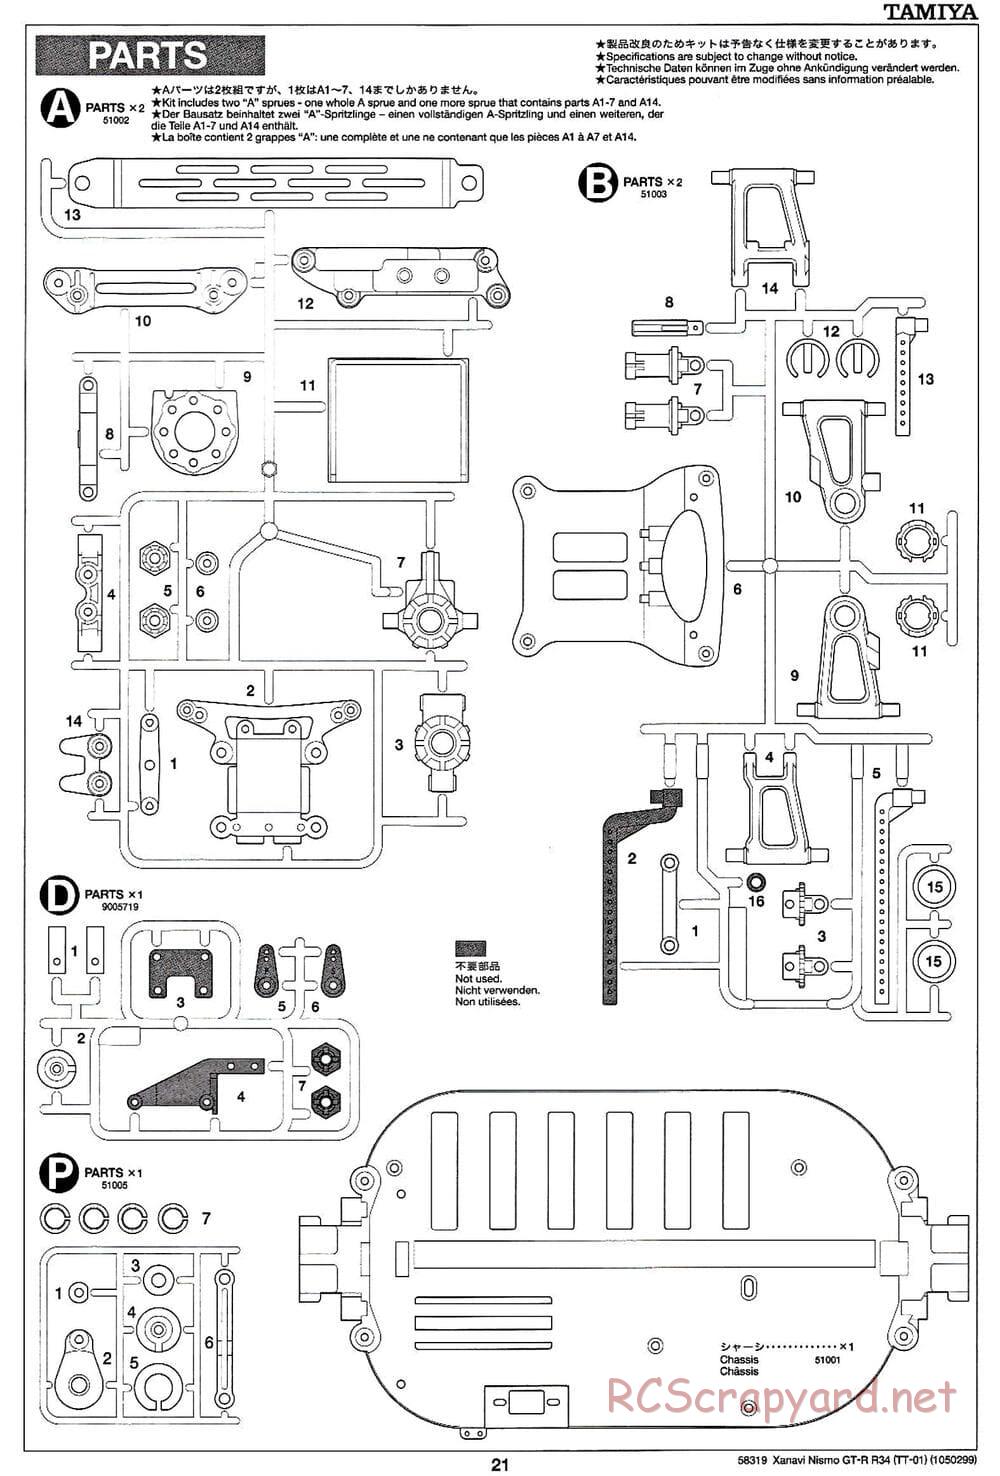 Tamiya - Xanavi Nismo GT-R R34 - TT-01 Chassis - Manual - Page 21